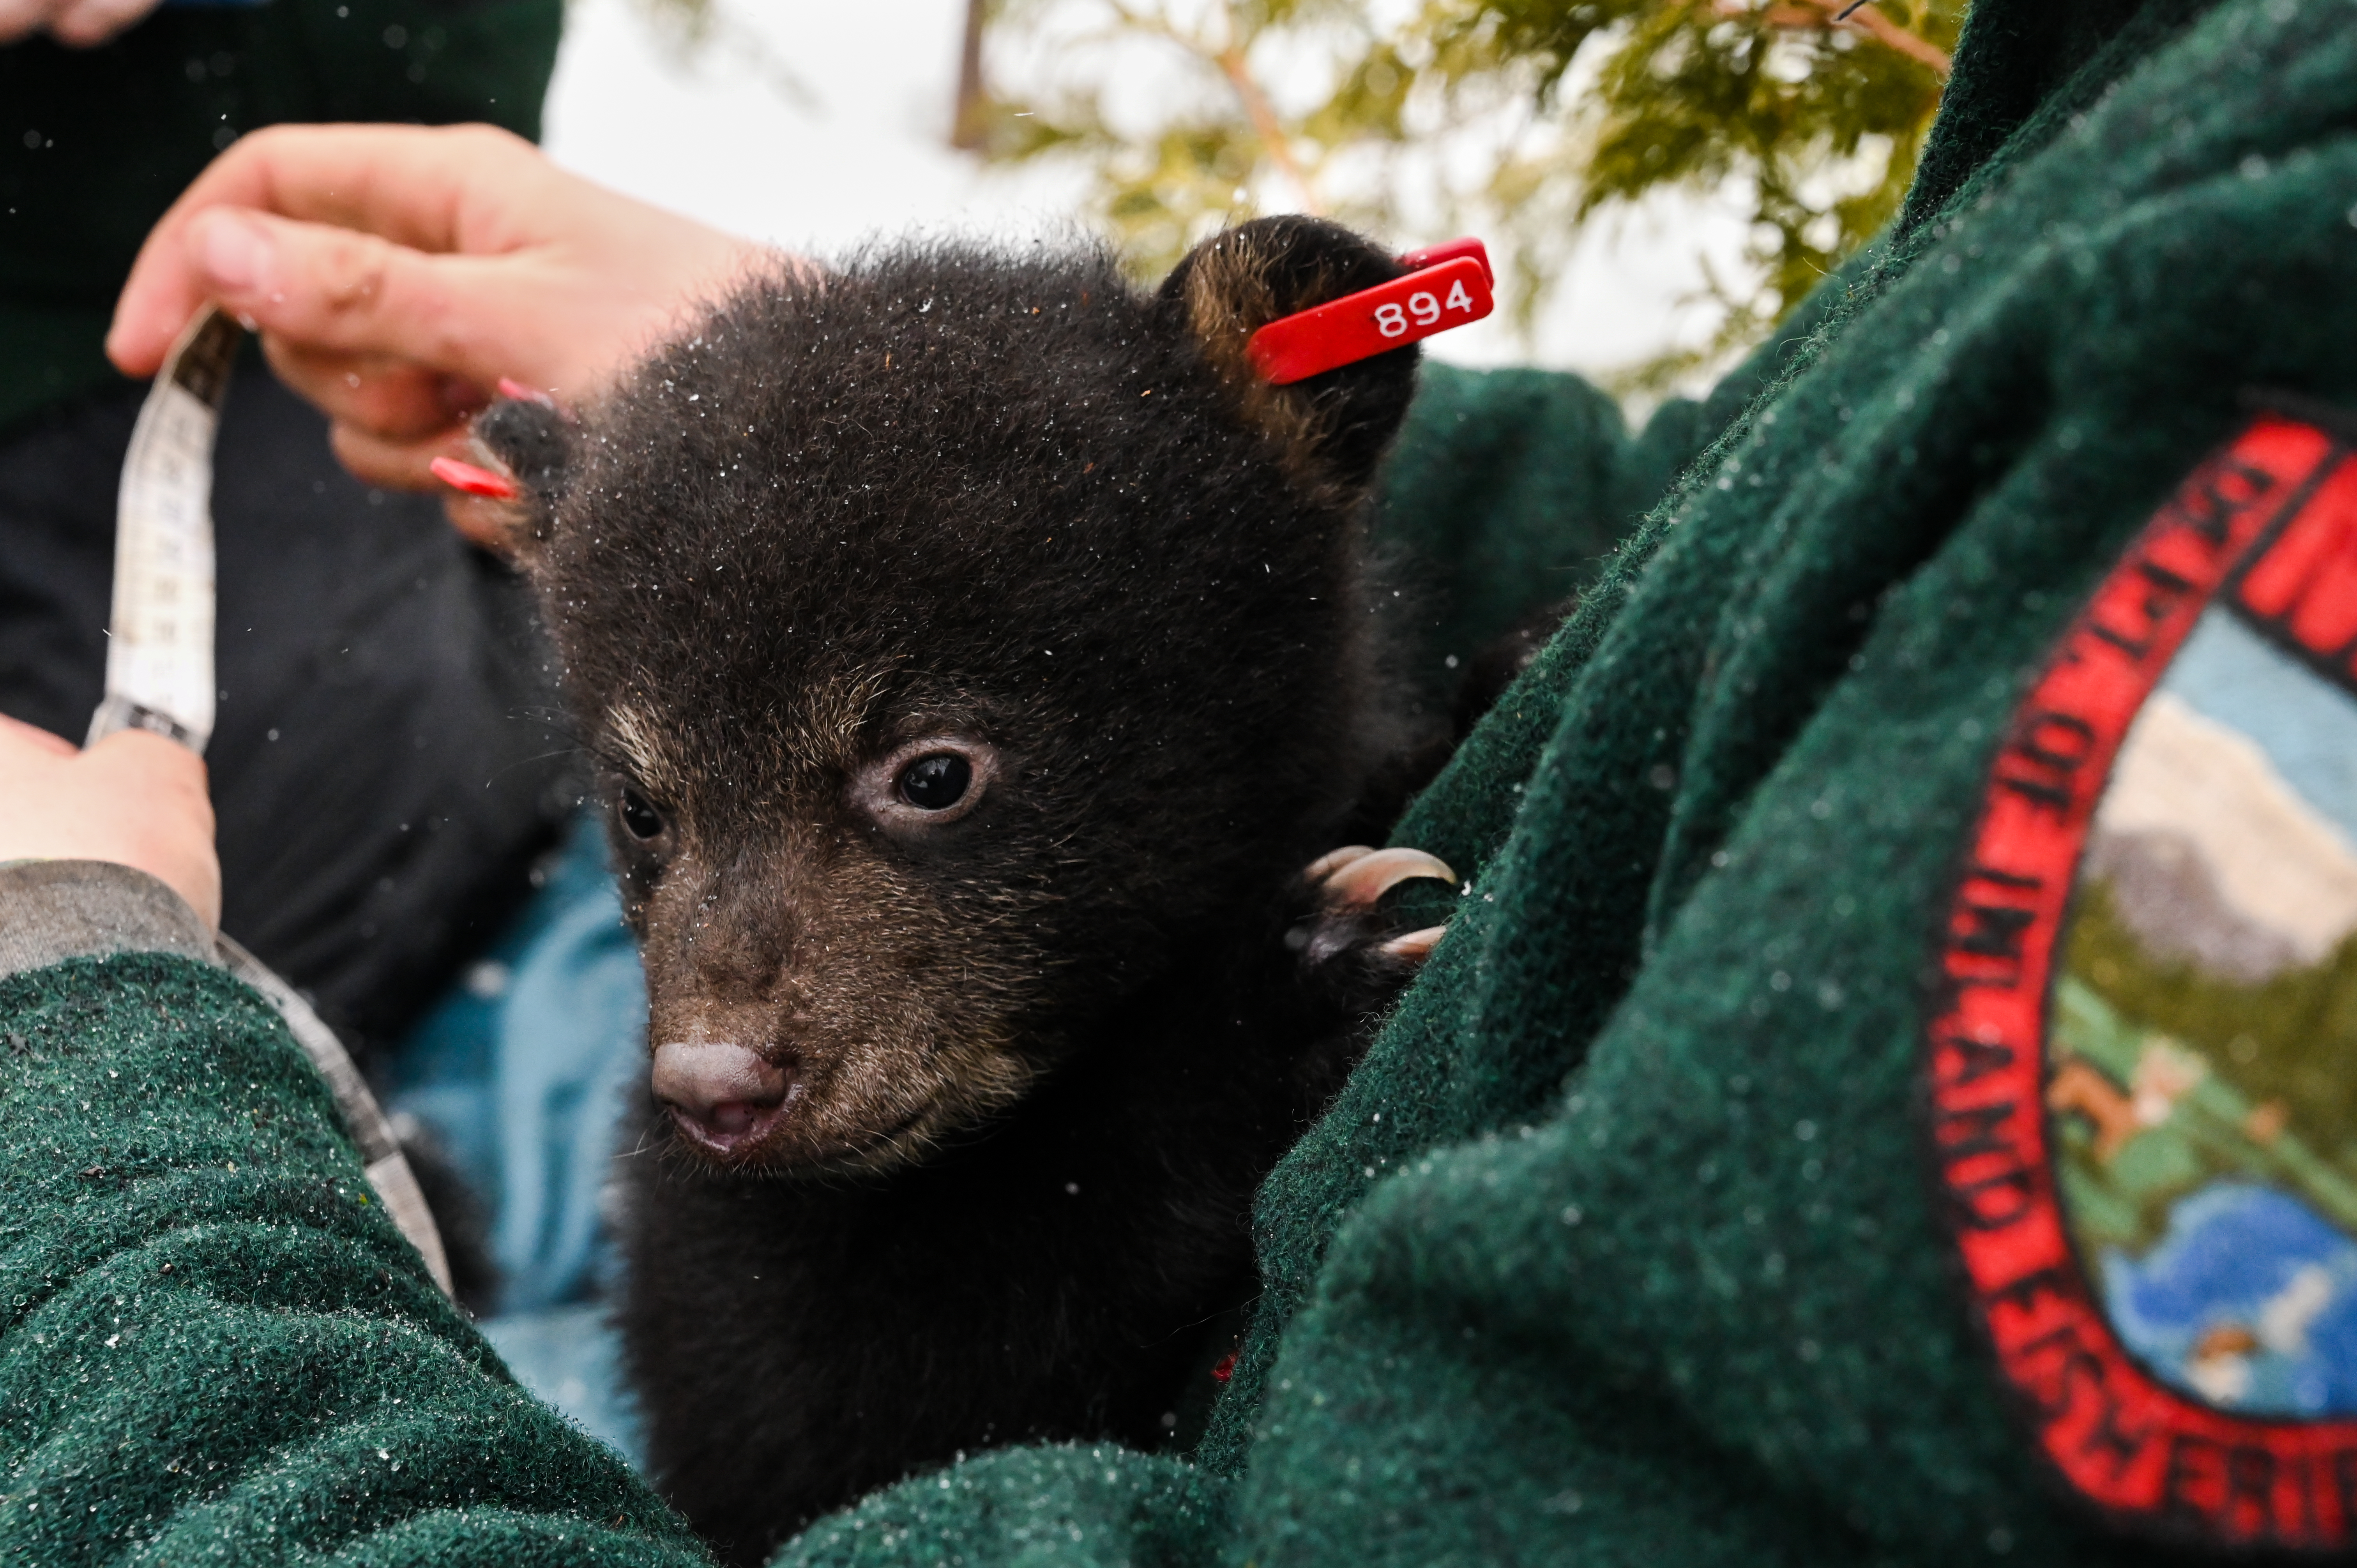 MDIFW Biologist taking measurements on a black bear cub